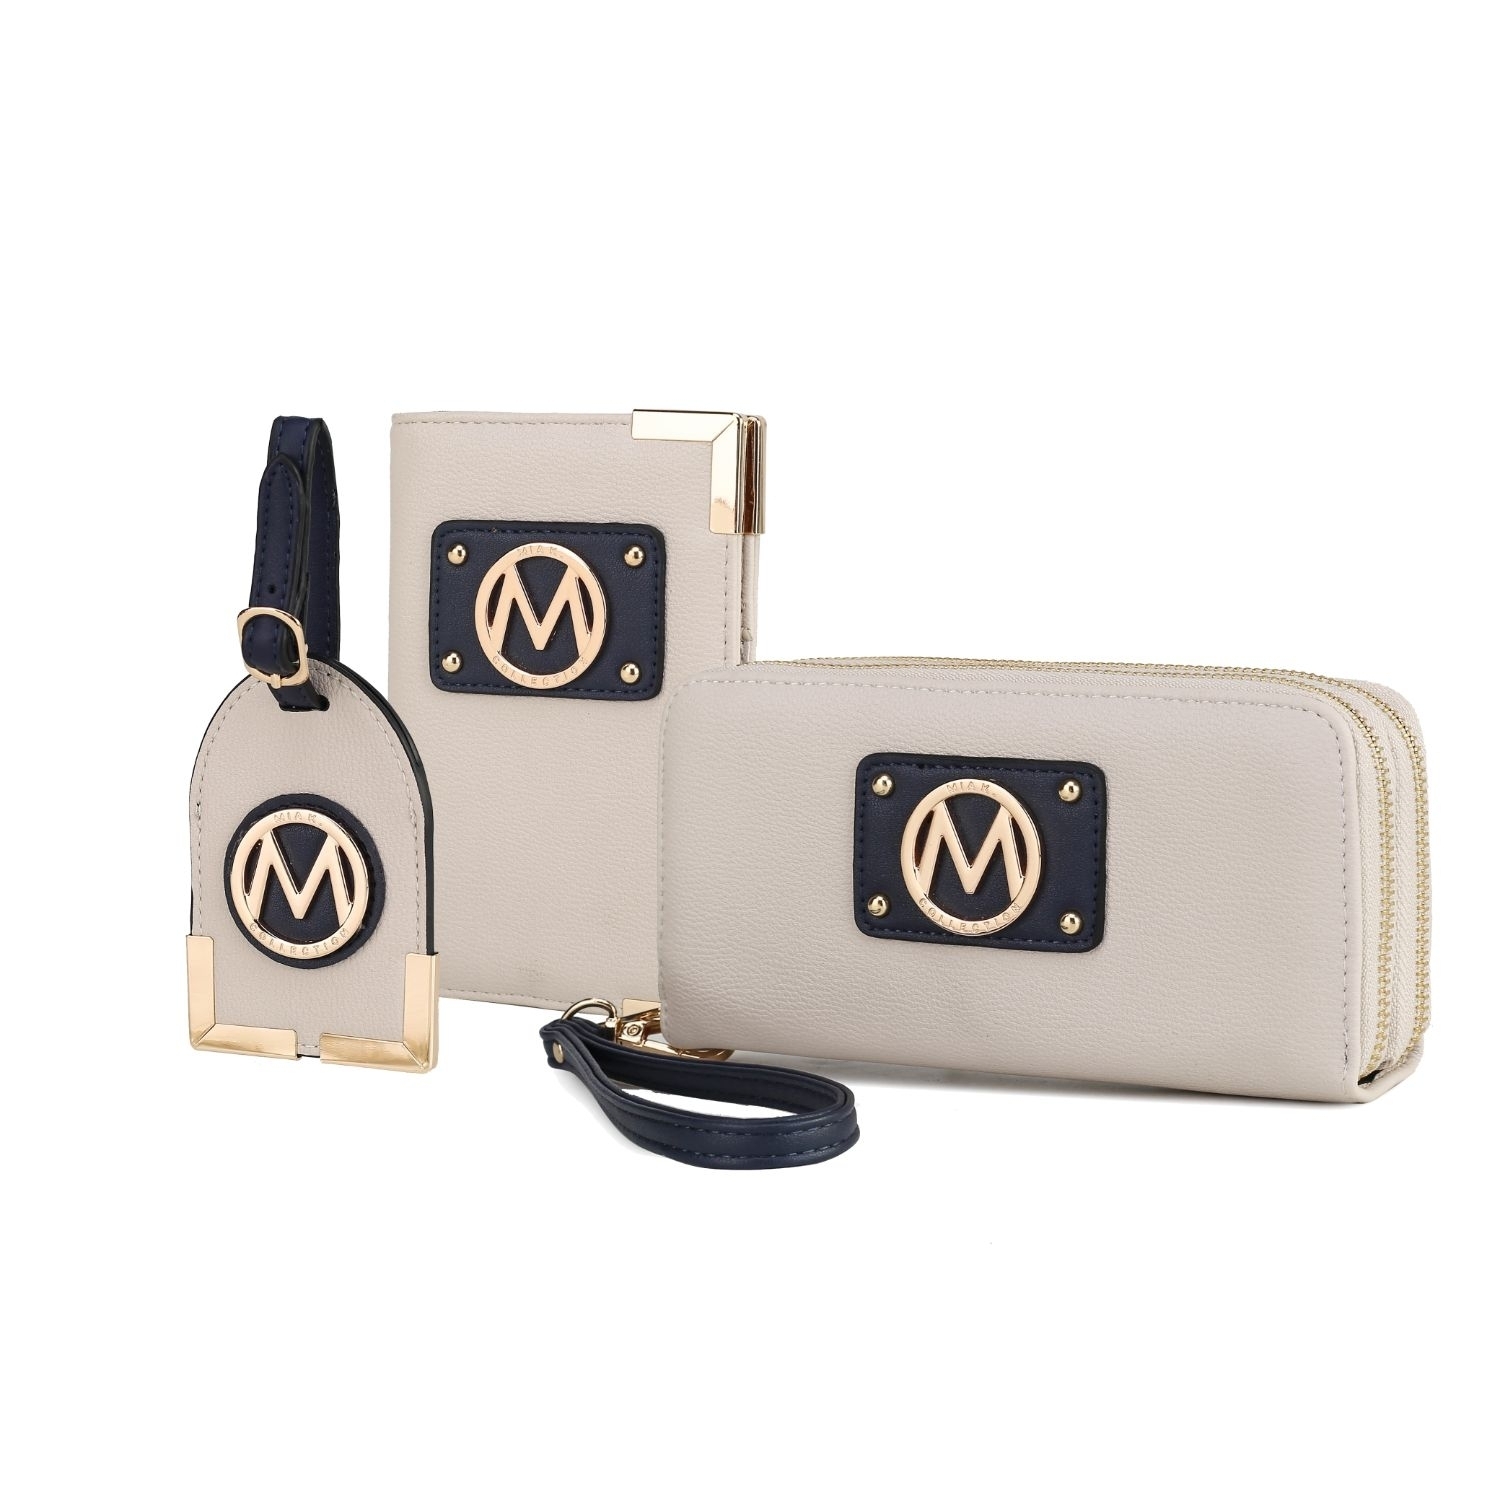 MKF Collection Darla Travel Gift Set Handbag By Mia K 3 Pieces - Ivory